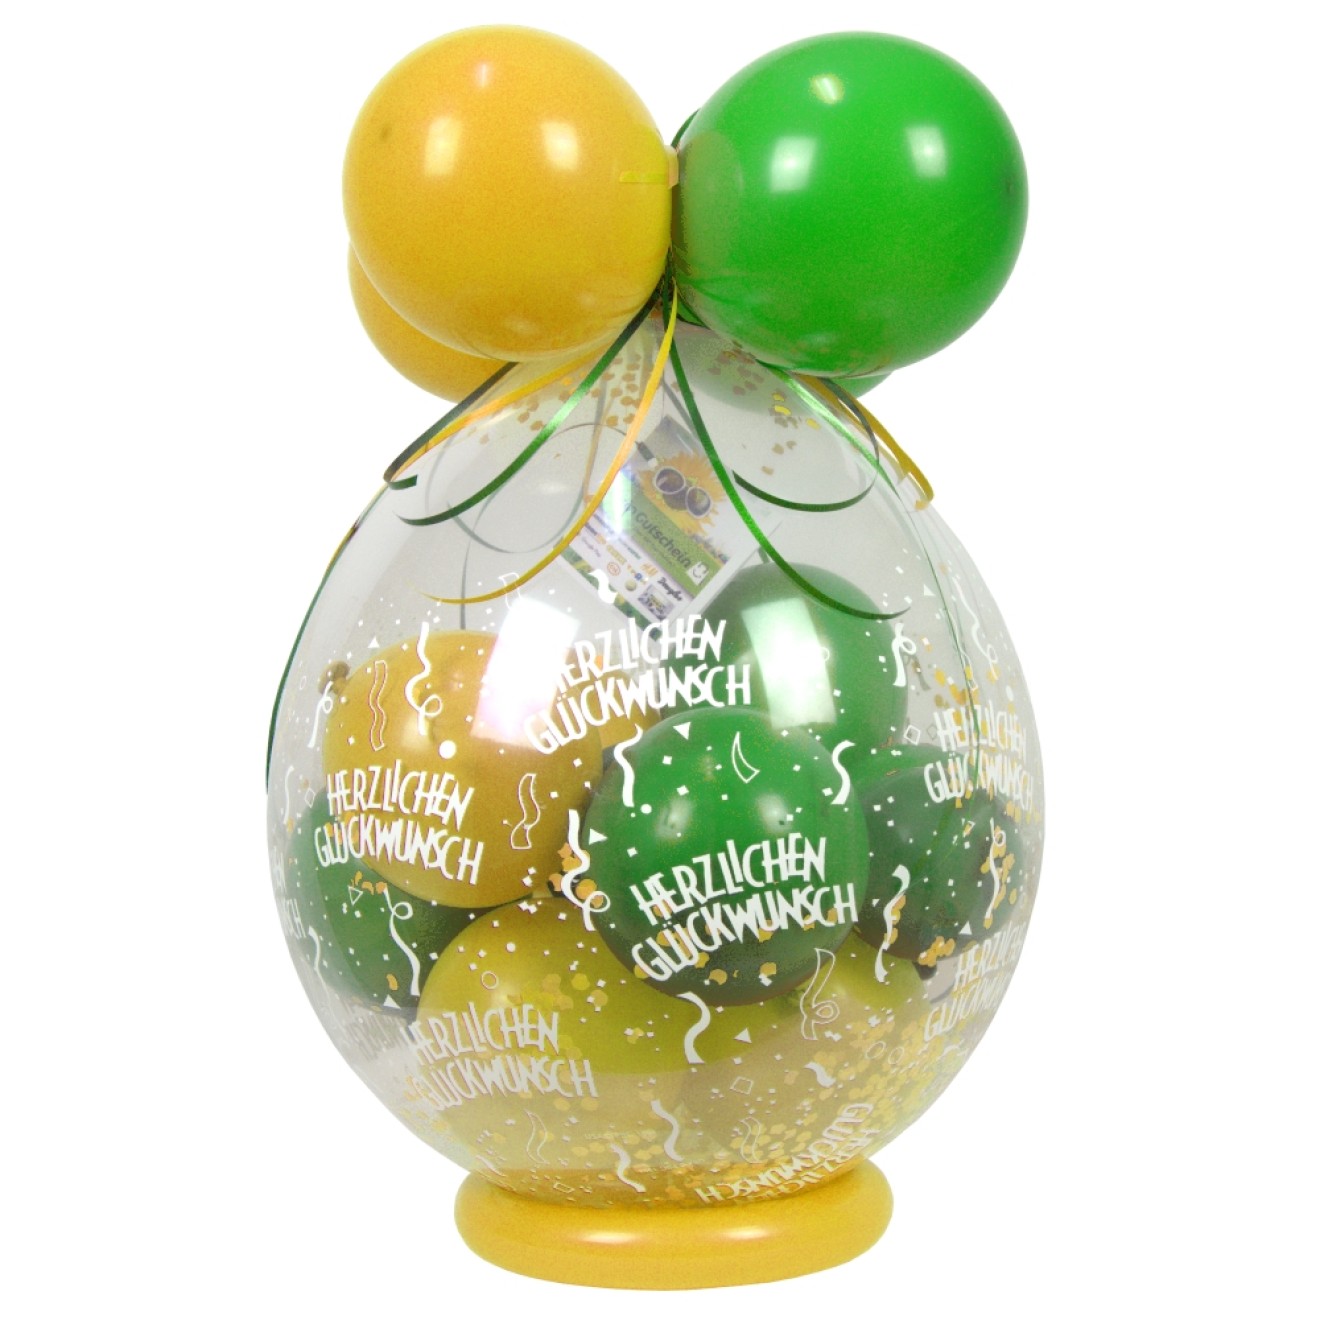 Verpackungsballon Geschenkballon: Herzlichen Glückwunsch - Limonengrün & Gelb - Basic Ø 50 cm